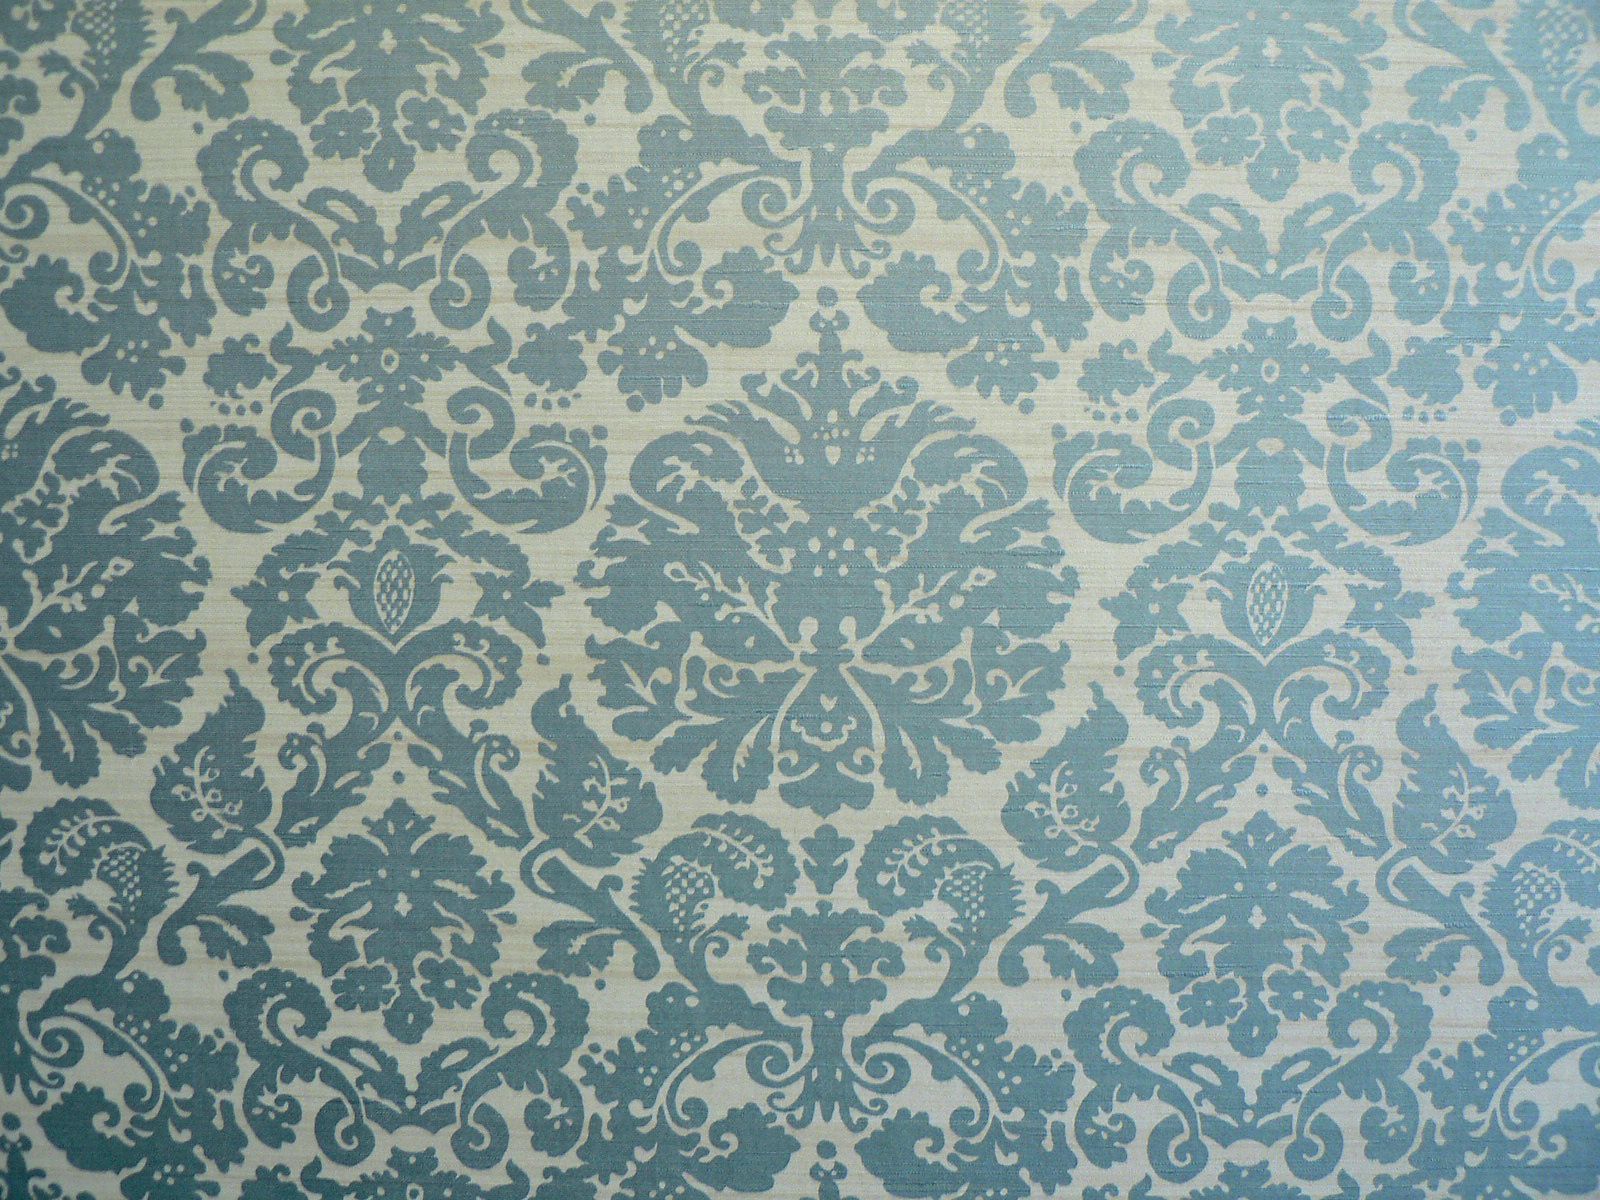 Gallery for - wallpaper pattern finder